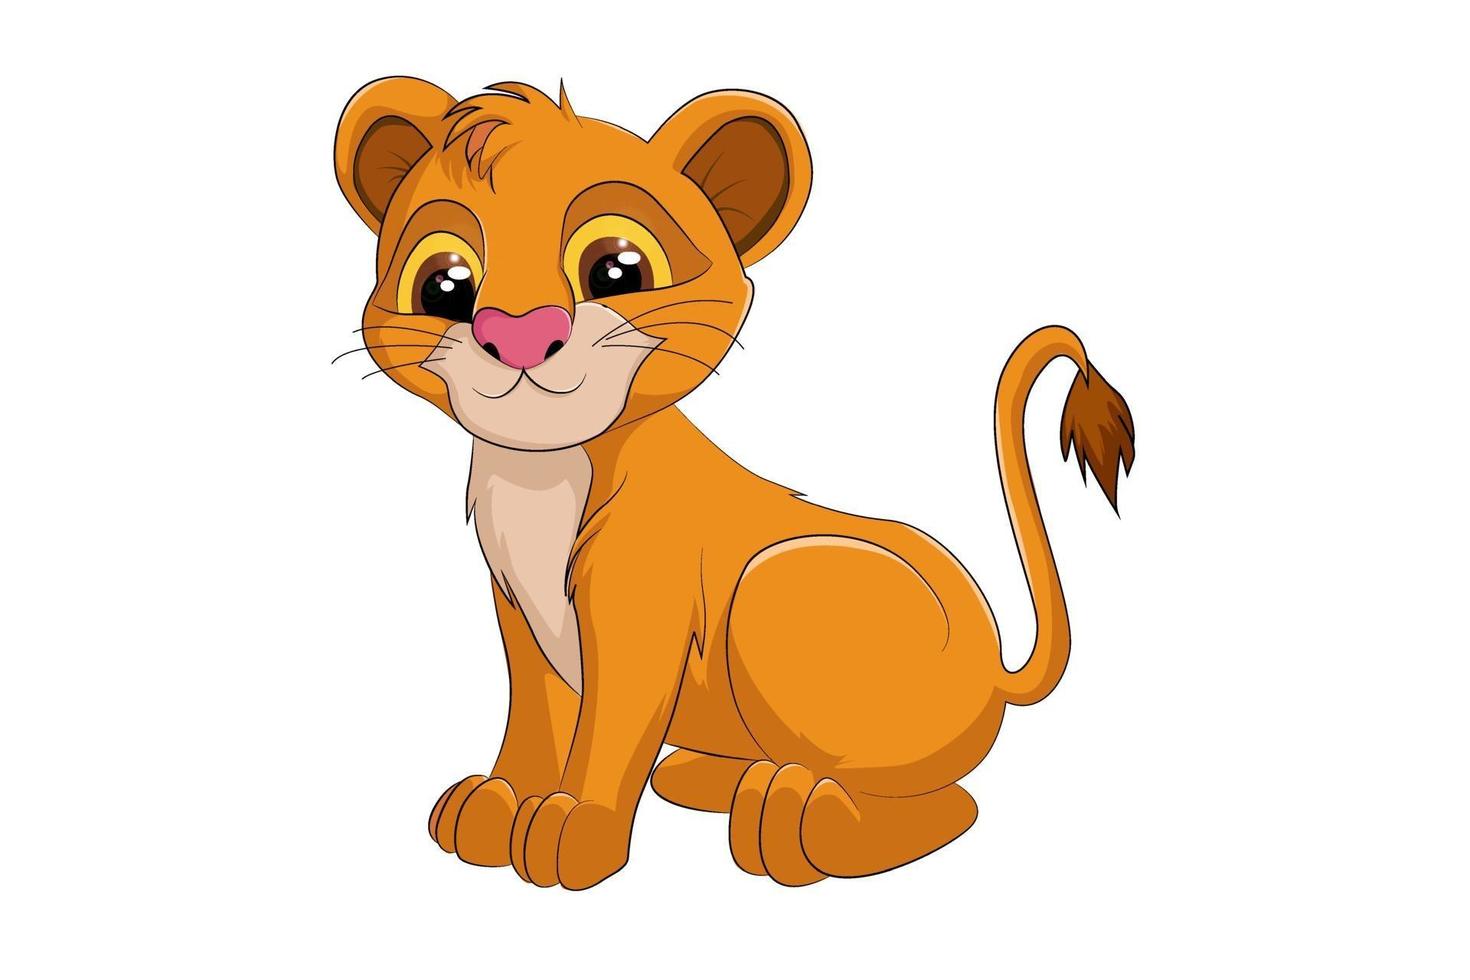 A cute baby lion, design animal cartoon vector illustration